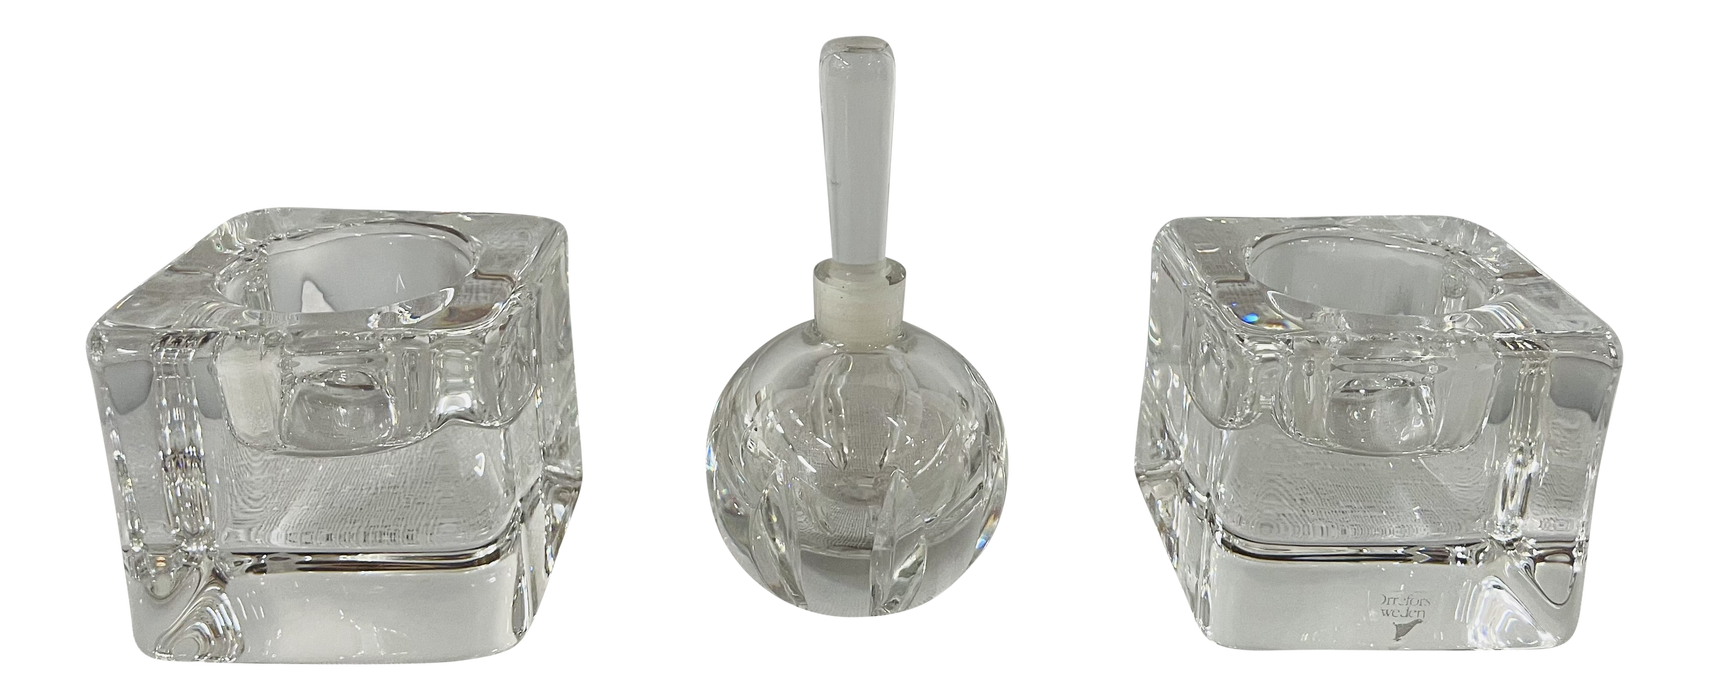 Orrefors Sweden Crystal Candle Holders and Perfume Bottles - Set of 3